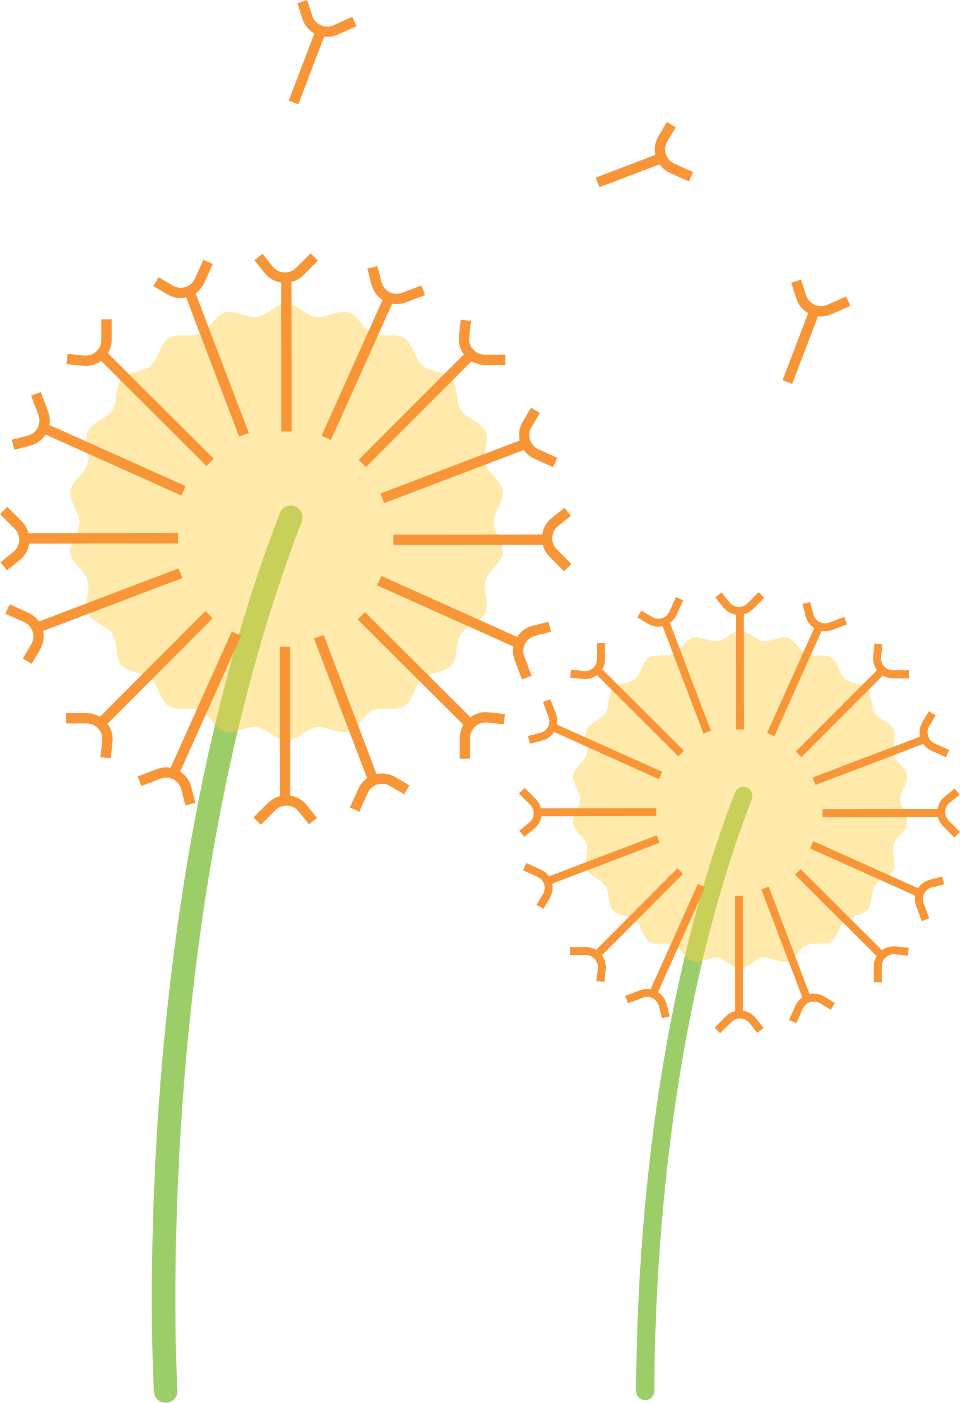 Weeds as a source of pollen